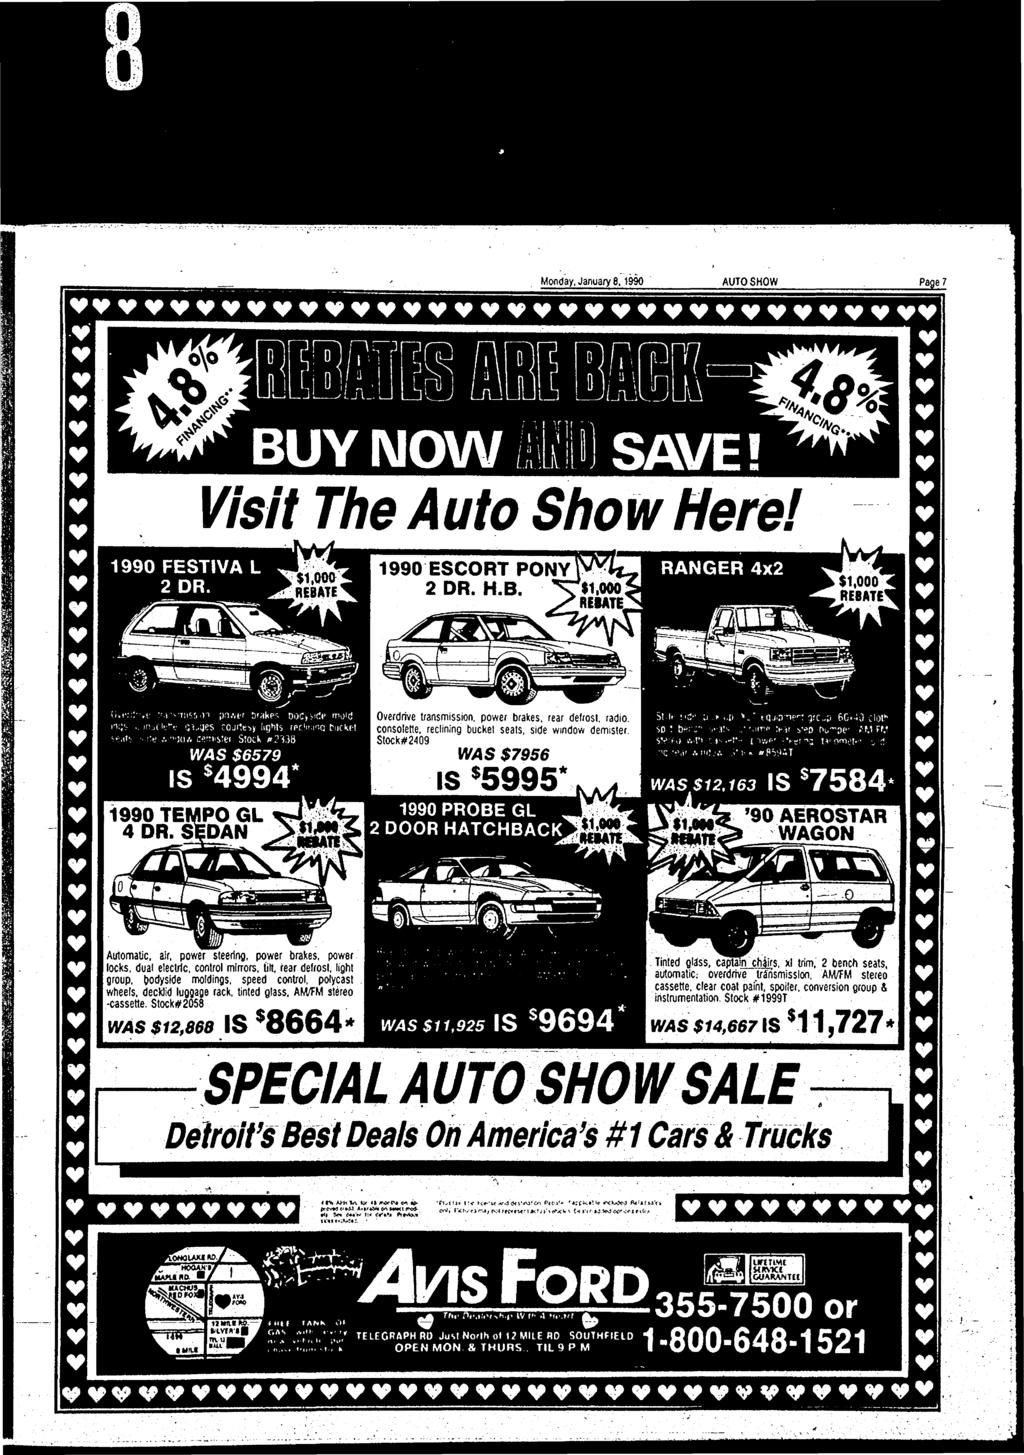 Monday, January 6,990 AUTO SHOW Page! vv ^^rprr^! U ^ ll- H!?S>, $6 BUY NOW "\nr /m SAVE! Vst The Auto Show Here! 990 FESTVA L 2 DR. $,000 REBATE 990 ESCORT PONY 2 DR. H.B. ^.000., REBATE.